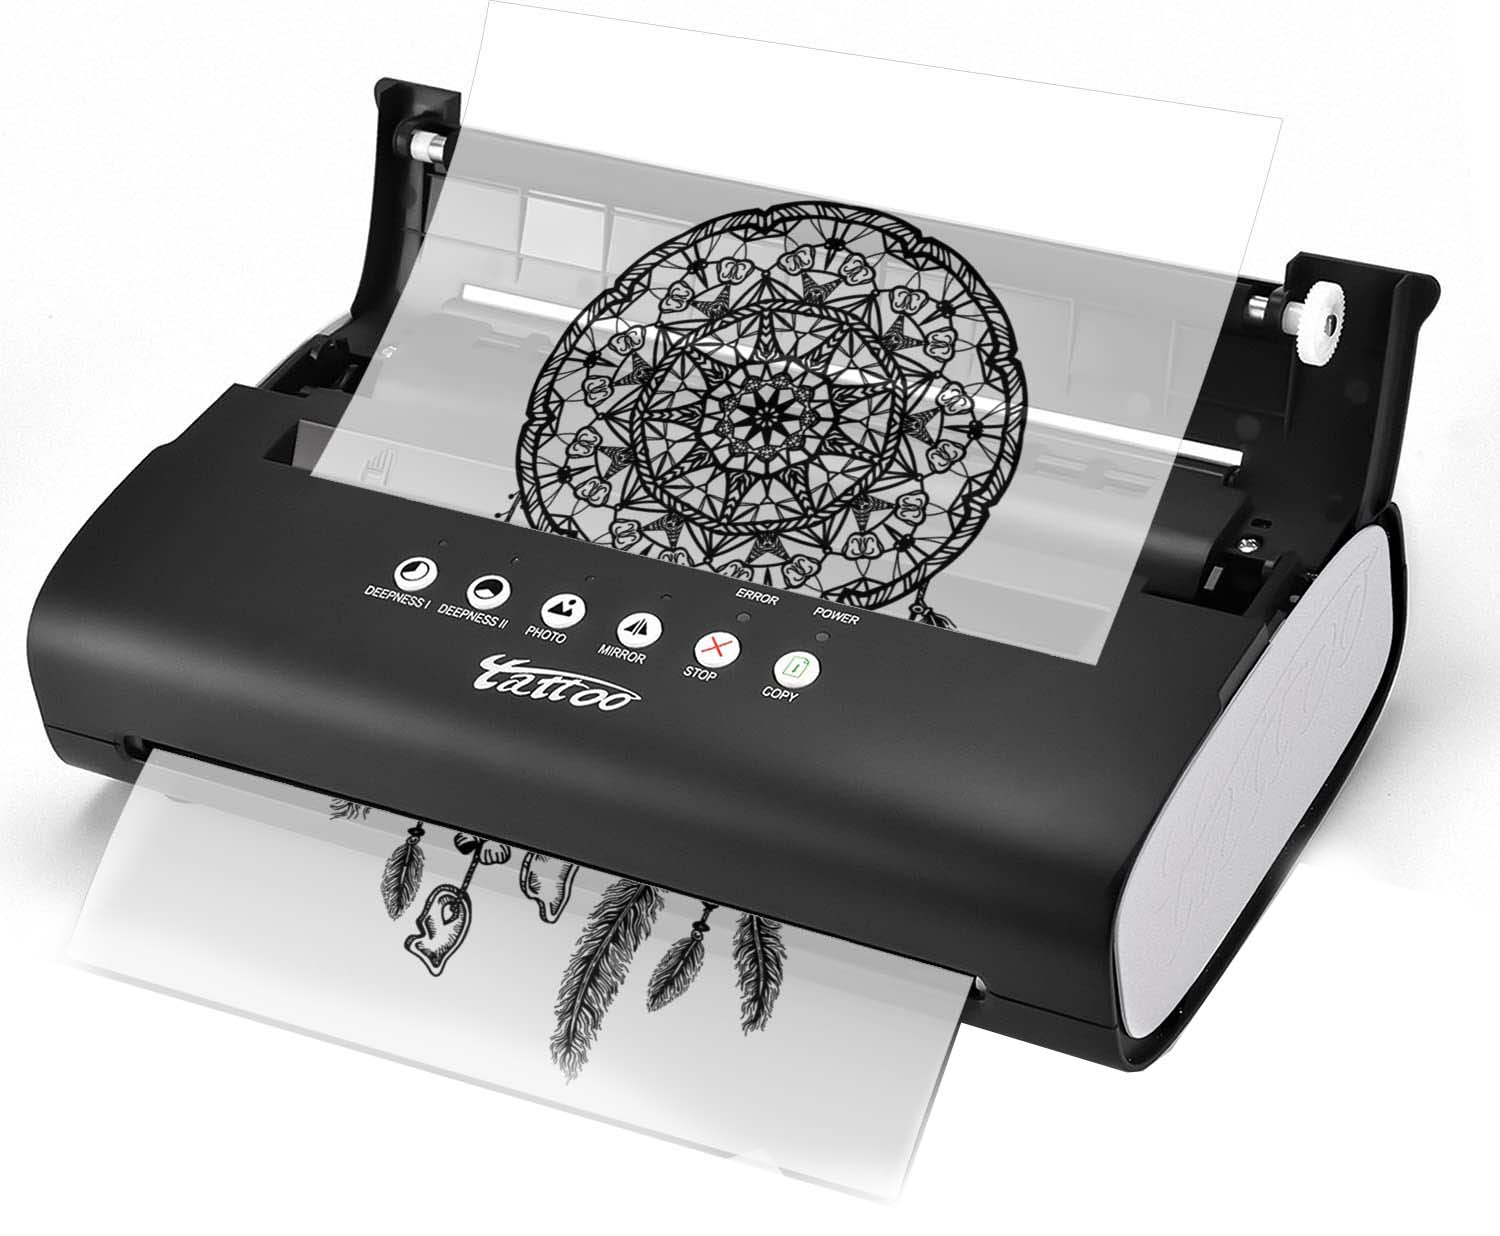 Tattoo Stencil Printer-BIOMASER Tattoo Transfer Printer Machine